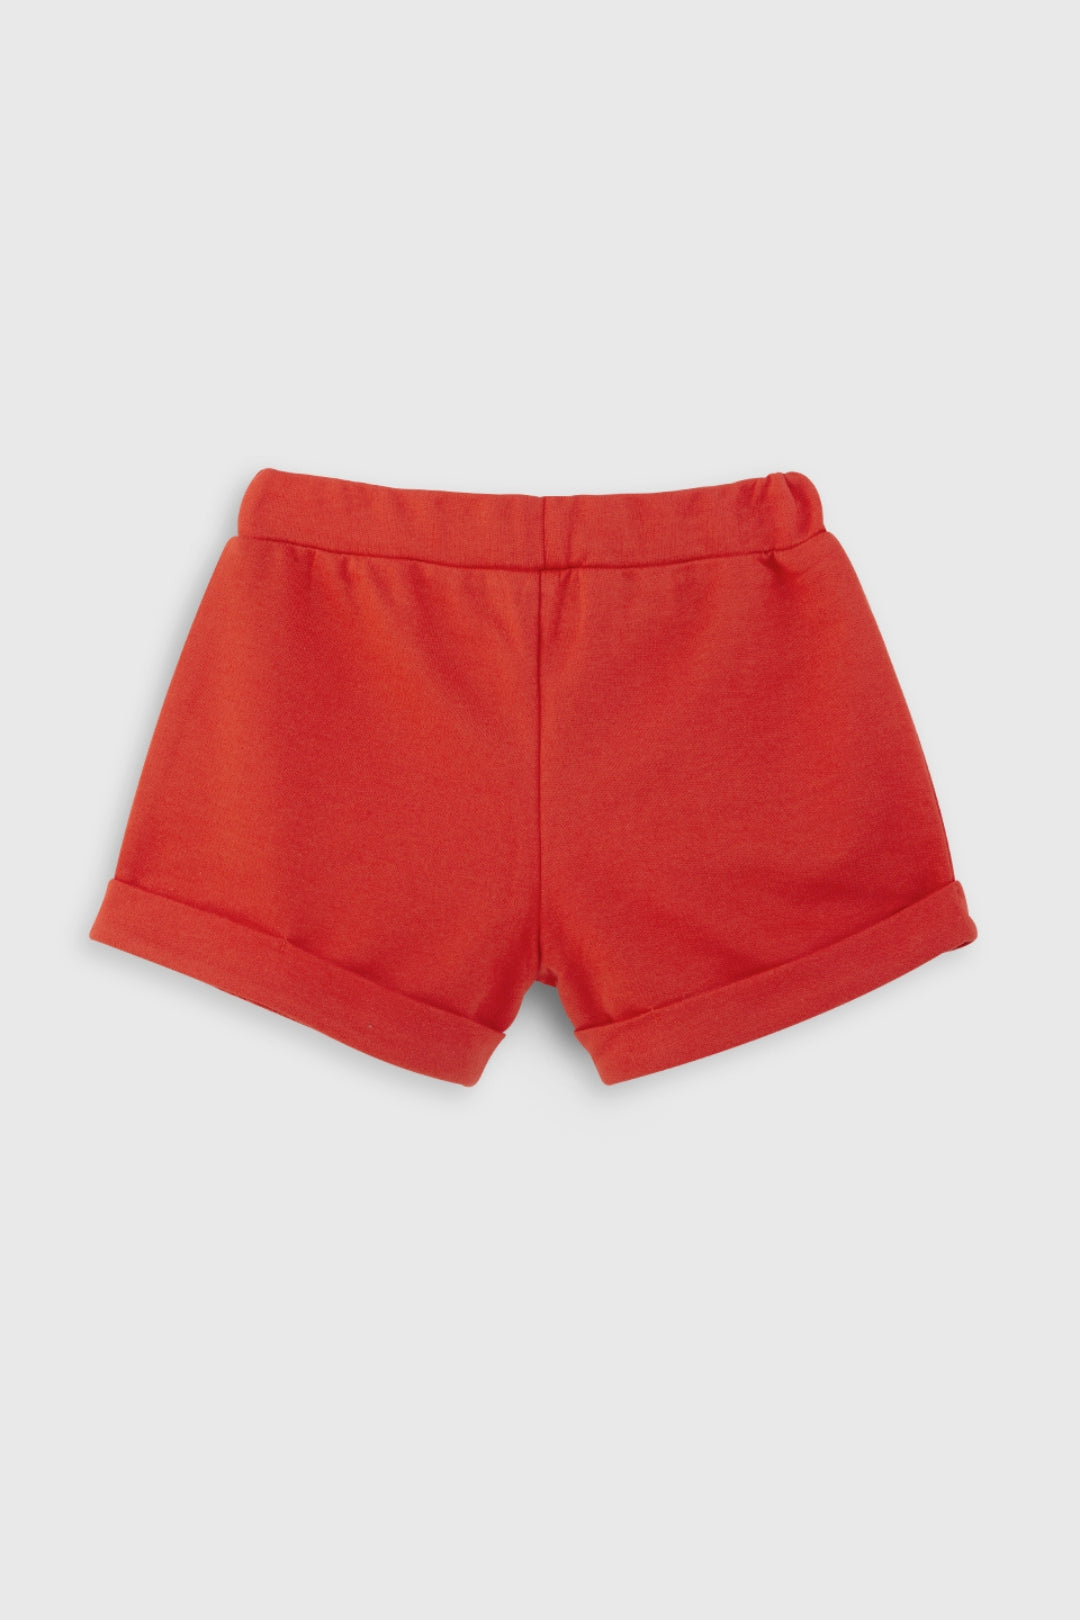 Orange and Grey Shorts Pack of 2